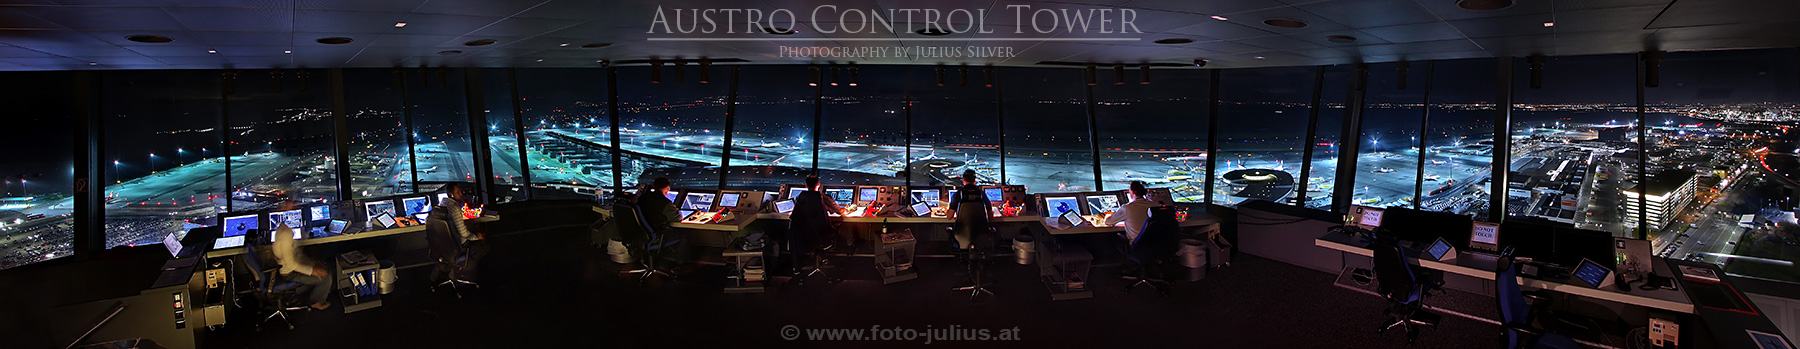 W4252a_Austro_Control_Tower_Airport_Wien_Schwechat.jpg, 280kB